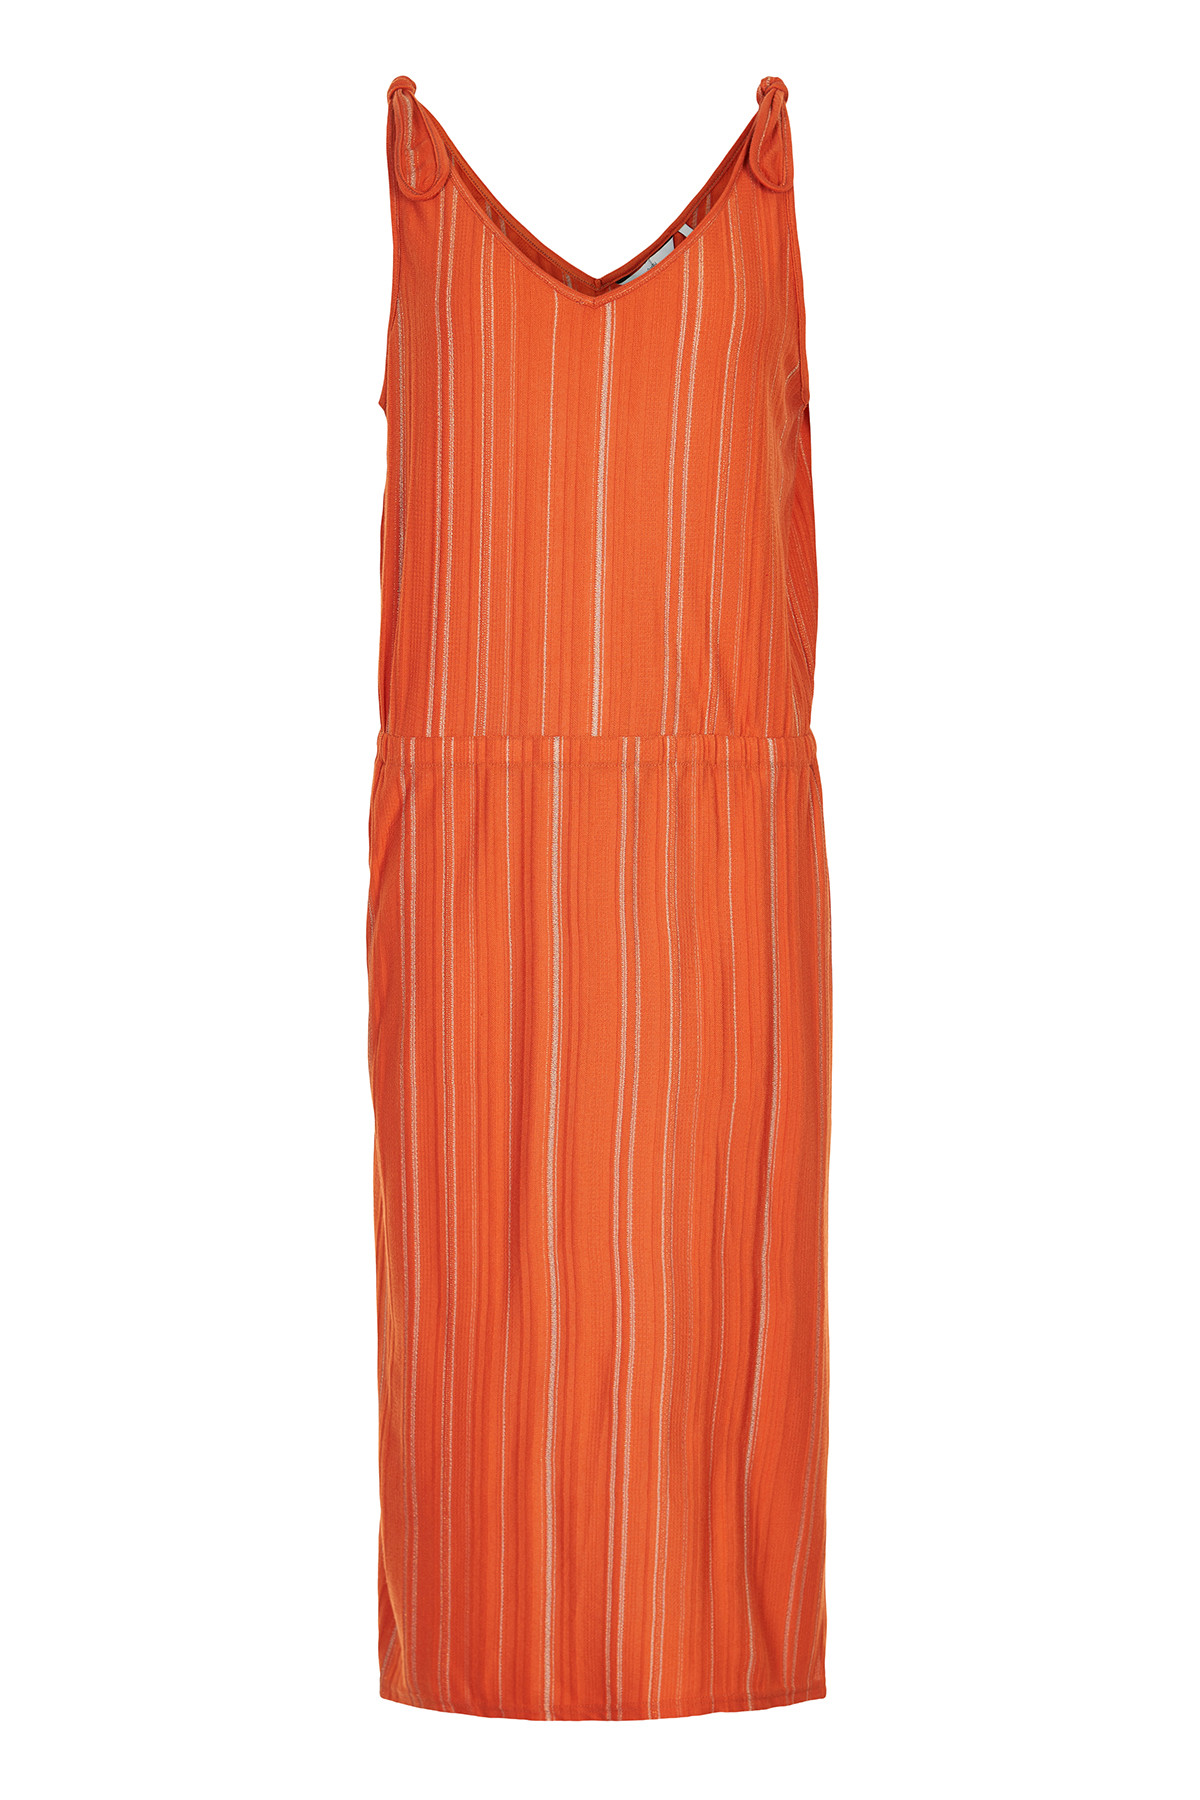 Nümph Nubridger Jersey Kjole, Farve: Orange, Størrelse: XS, Dame